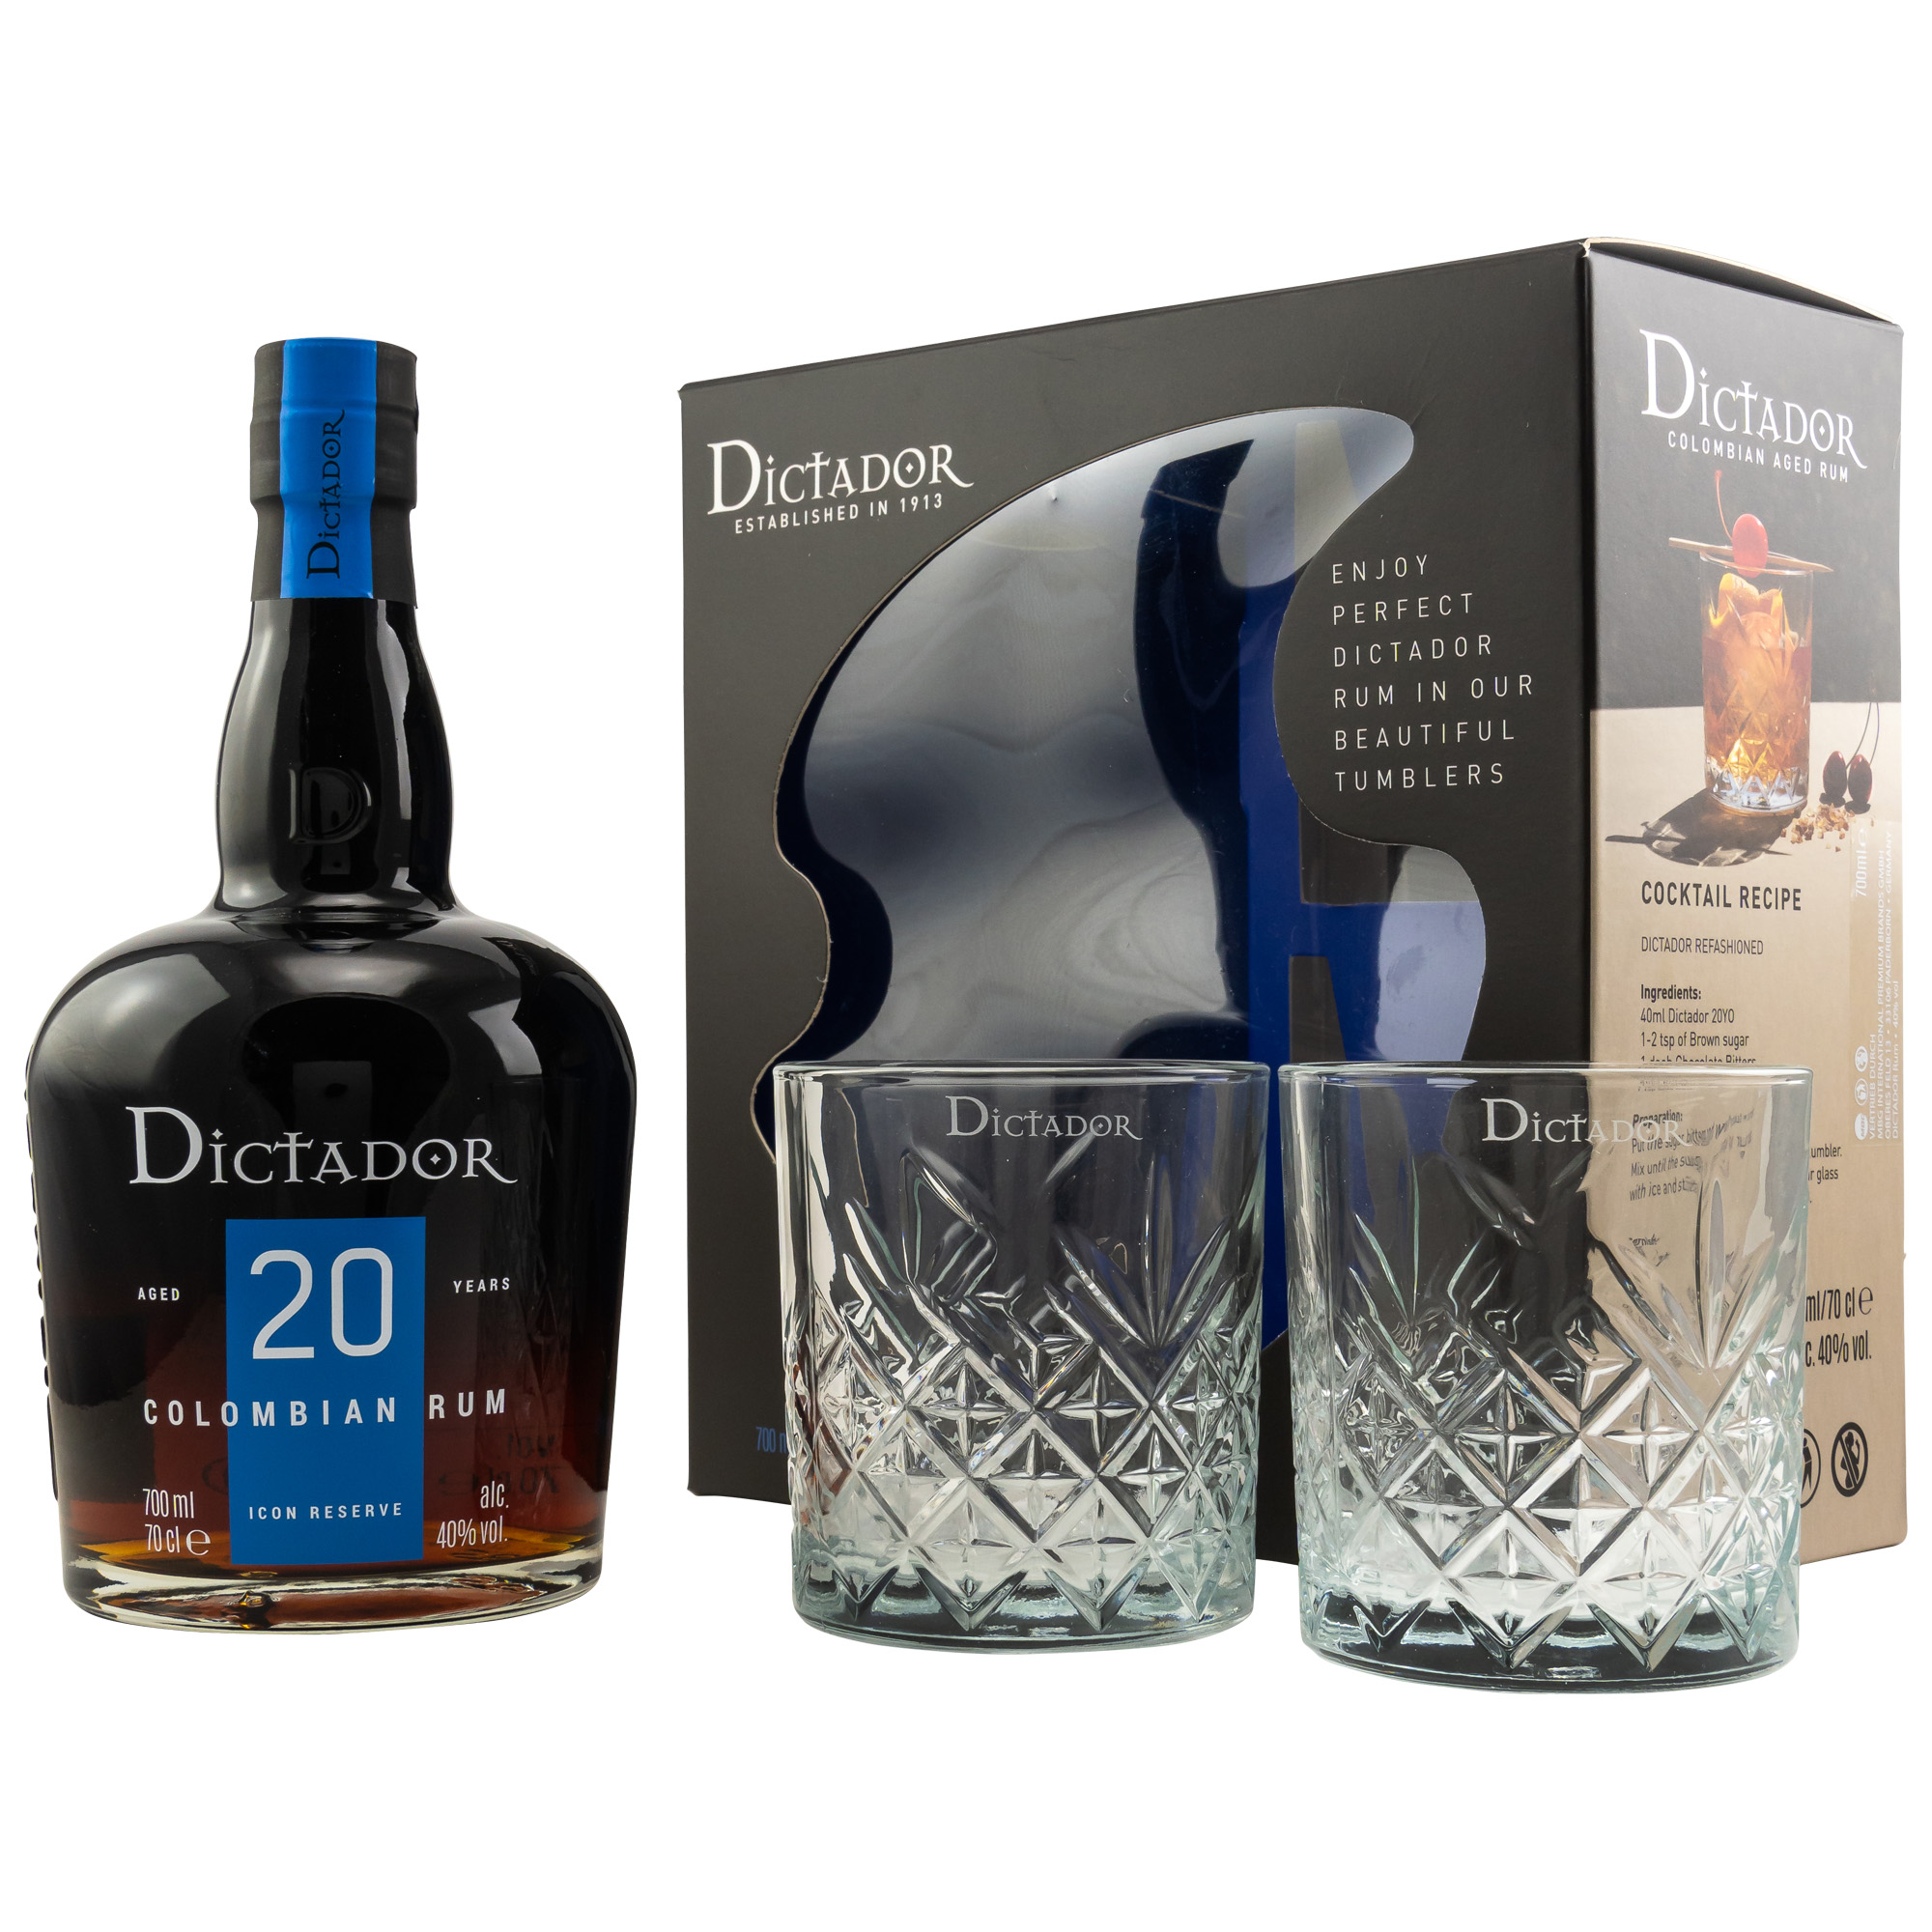 Dictador 20 Jahre Set incl. 2 Gläser / Icon Reserve Colombian Rum / 40% Vol. 0,7 ltr.